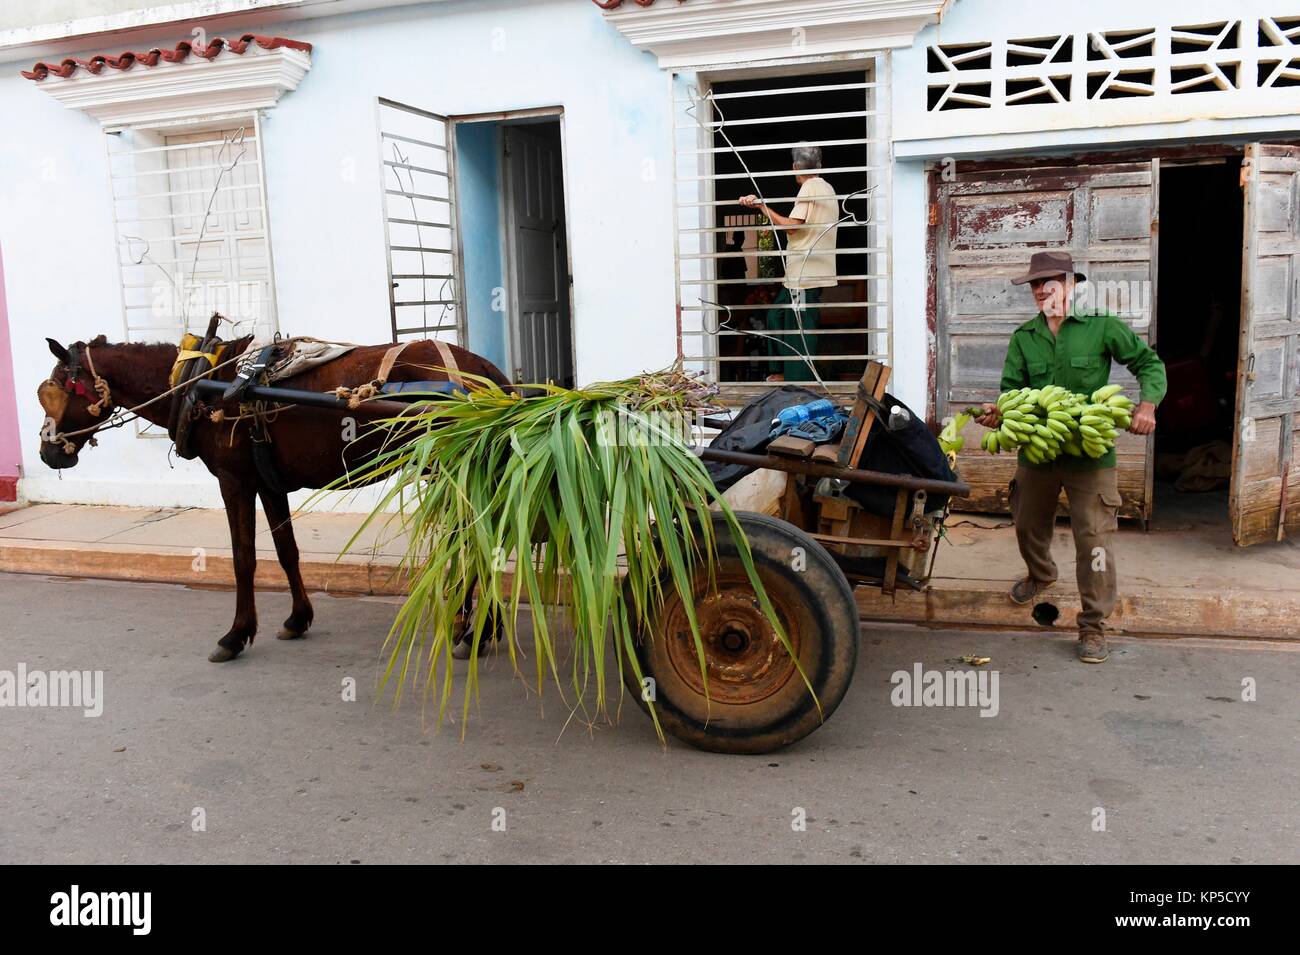 Man transporting bananas in a horse cart, Remedios, Cuba. Stock Photo